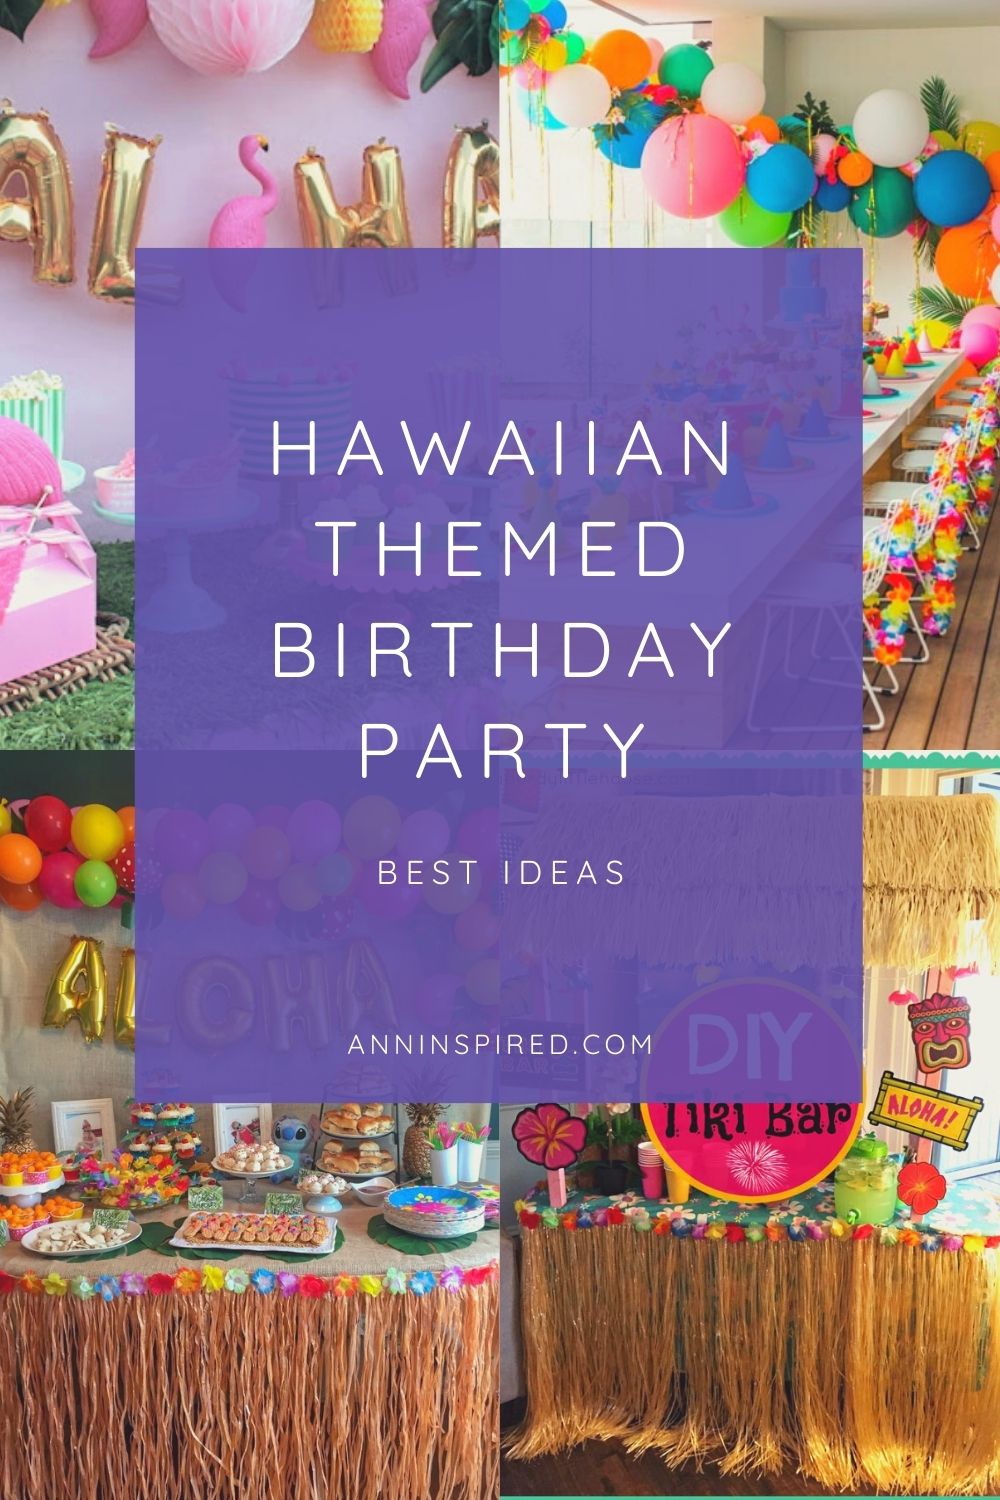 How to Throw a Hawaiian Themed Birthday Party